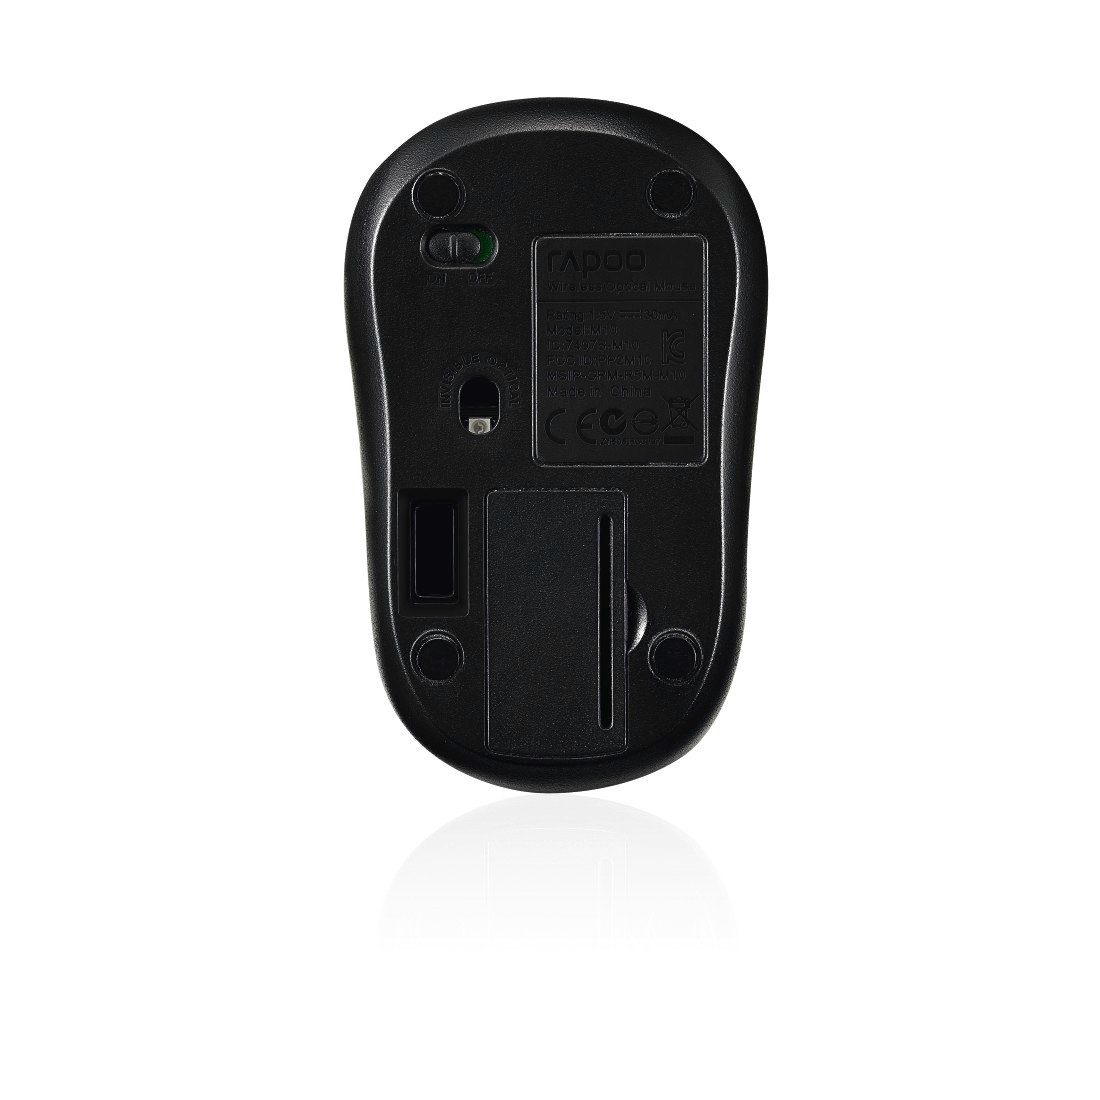 Maus, schwarz DPI kabellose Plus Rapoo 2.4 Wireless 1000 (Funk) Maus GHz Verbindung, M10